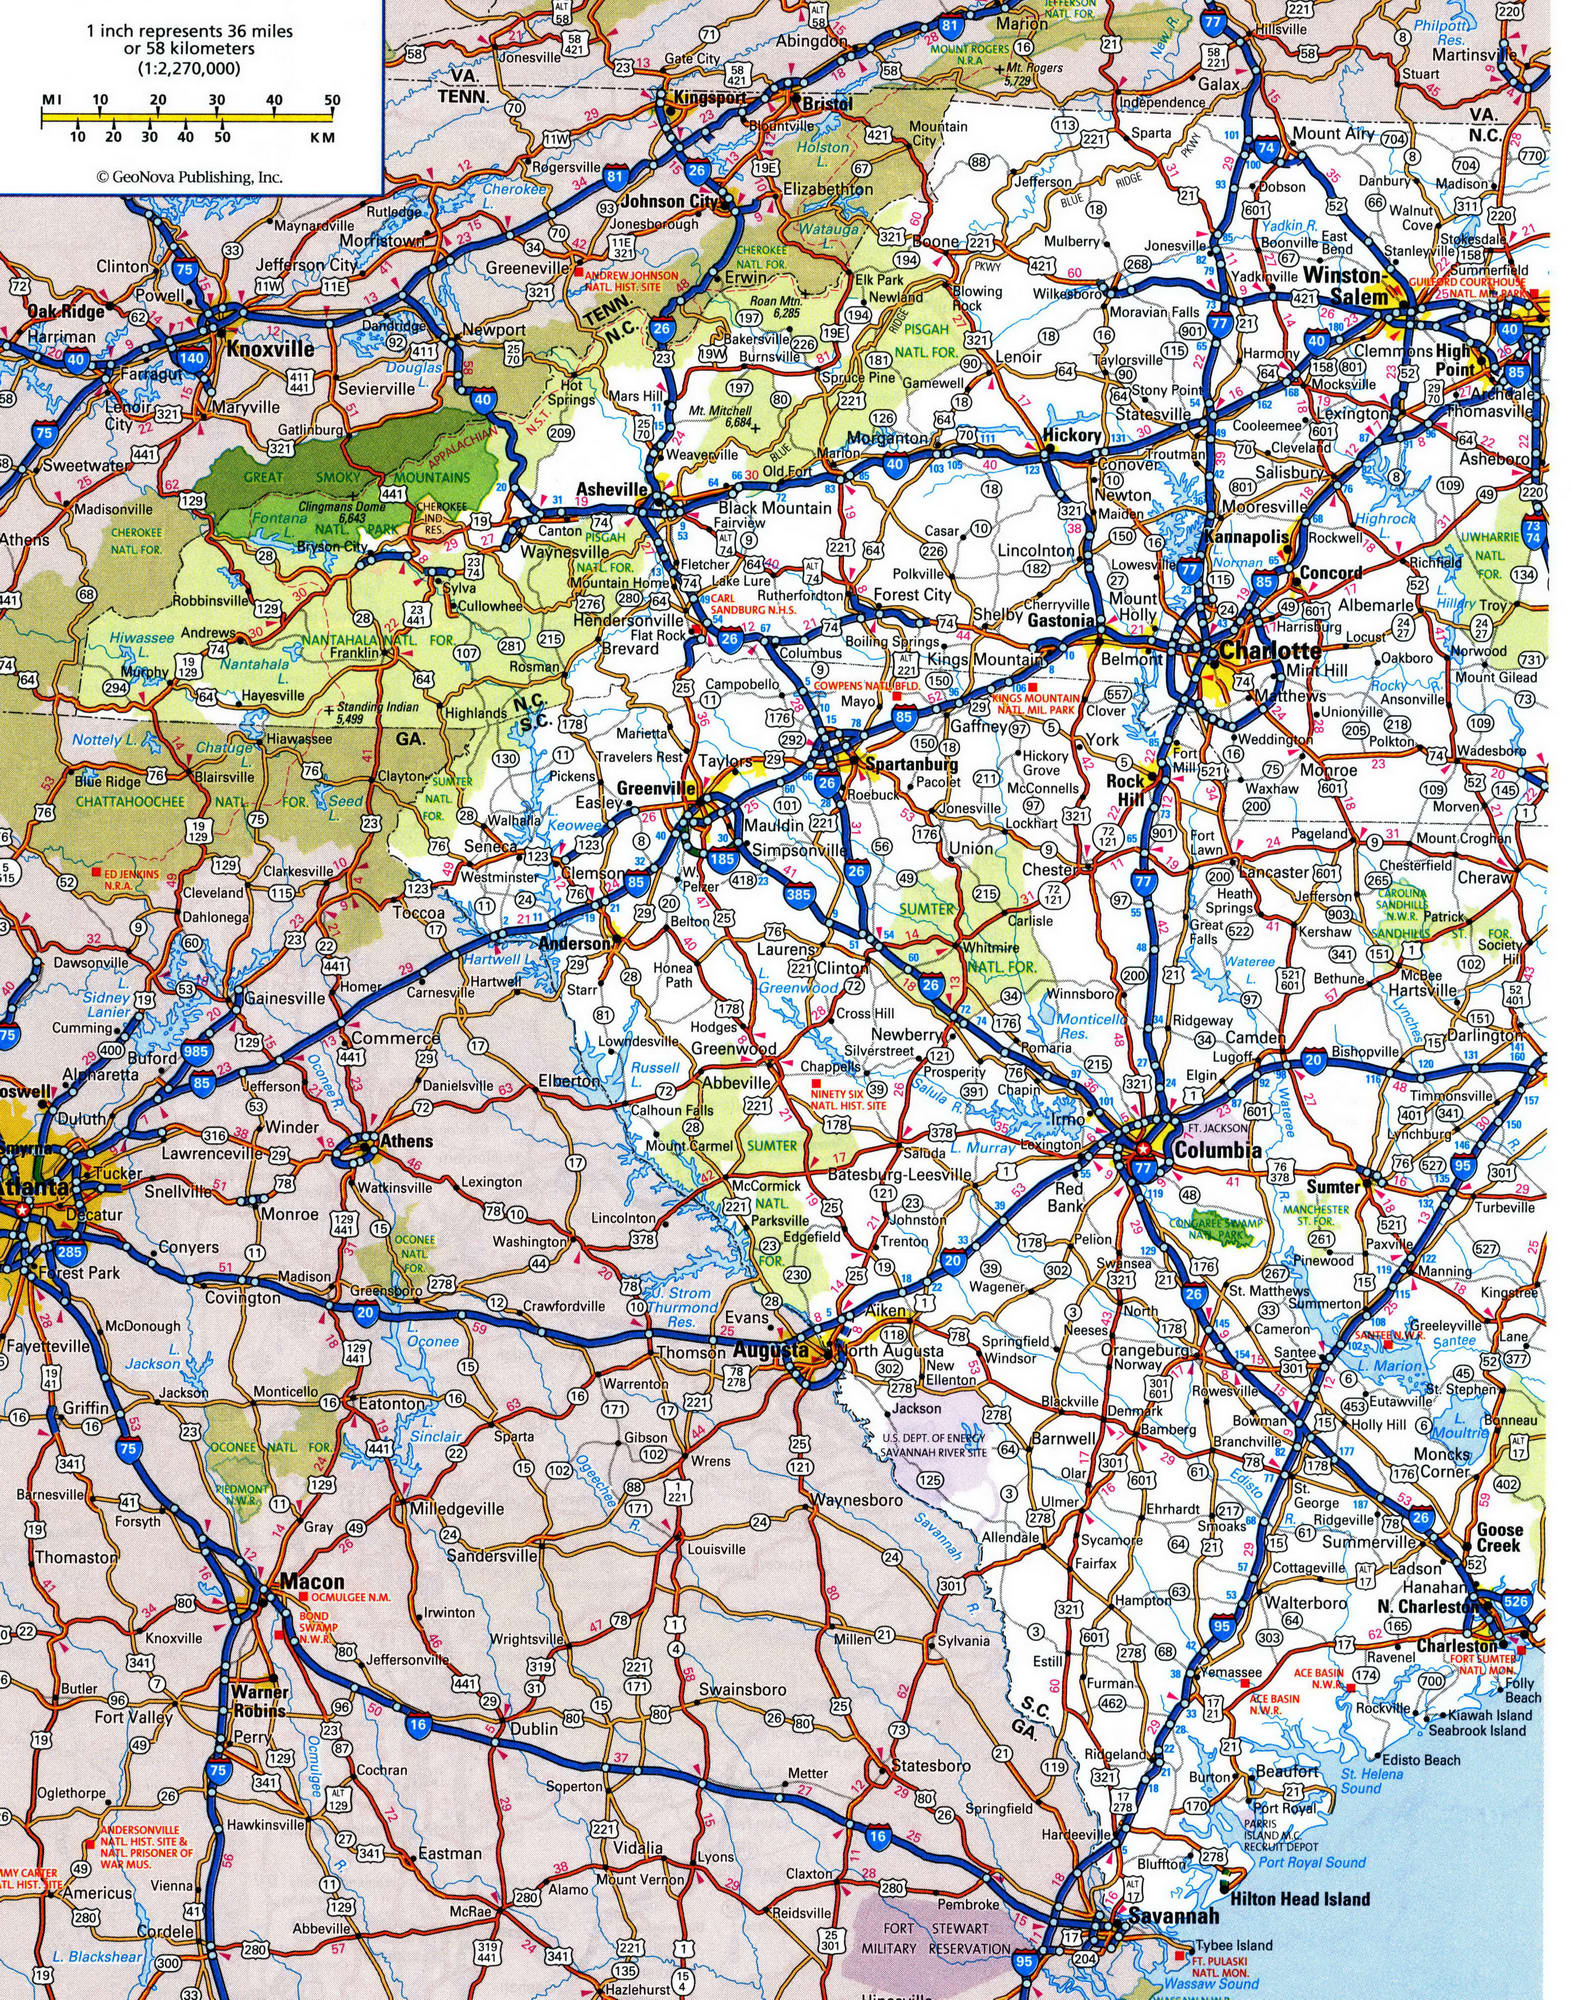 South Carolina detailed map